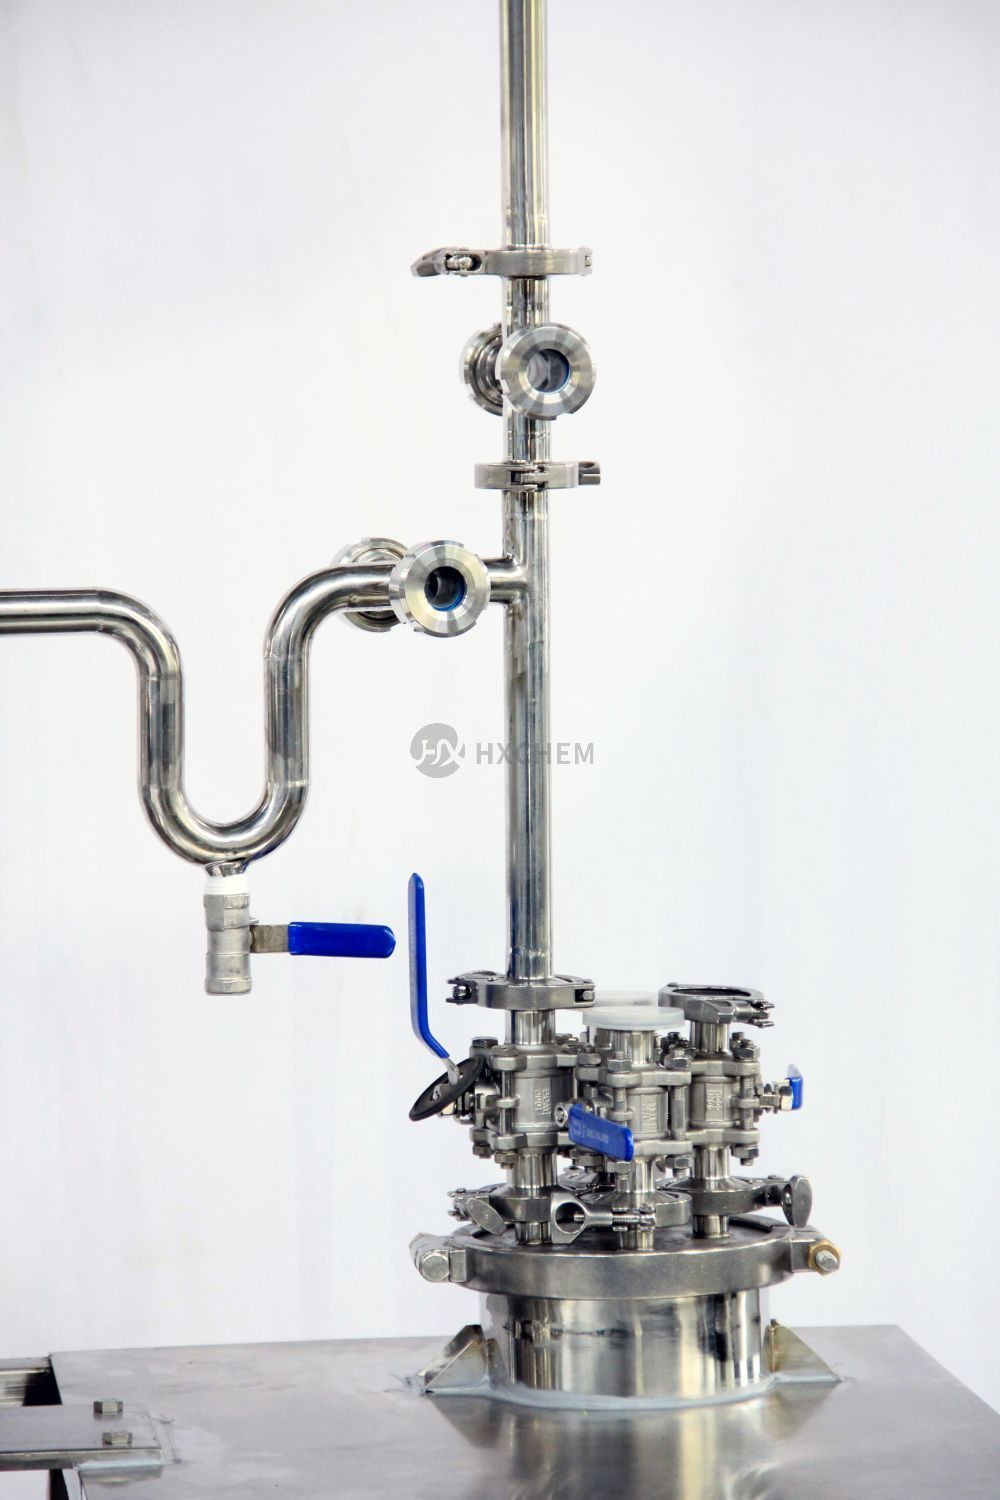 Distillation recovery unit